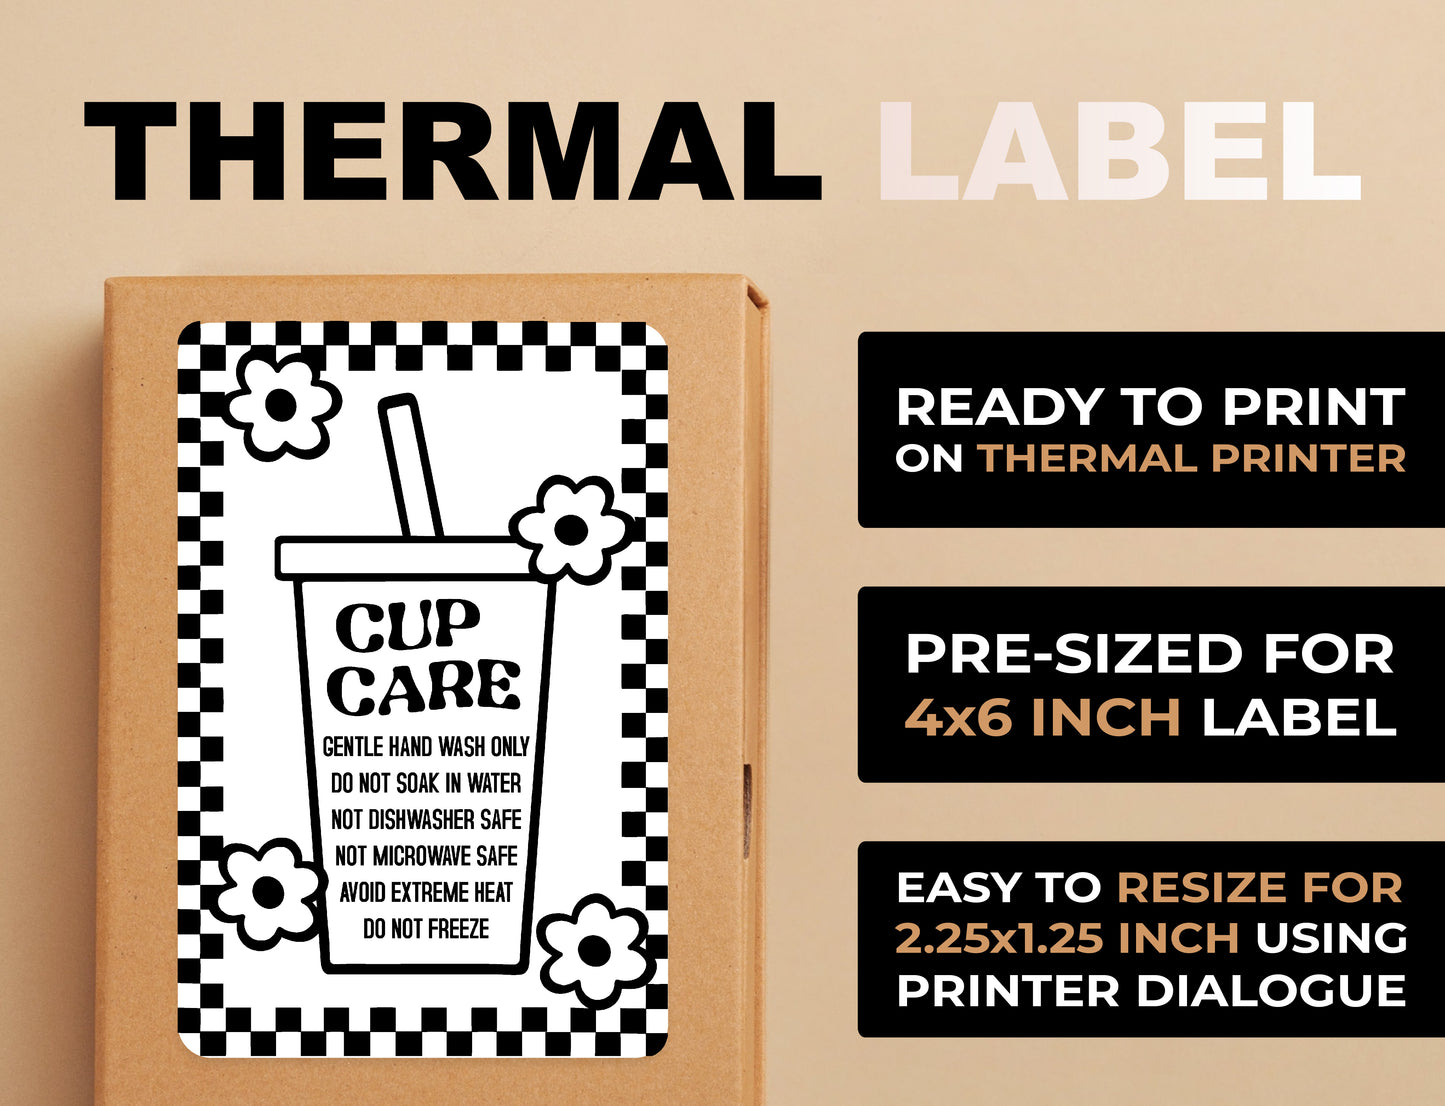 Retro Cold Cup Care Thermal Label